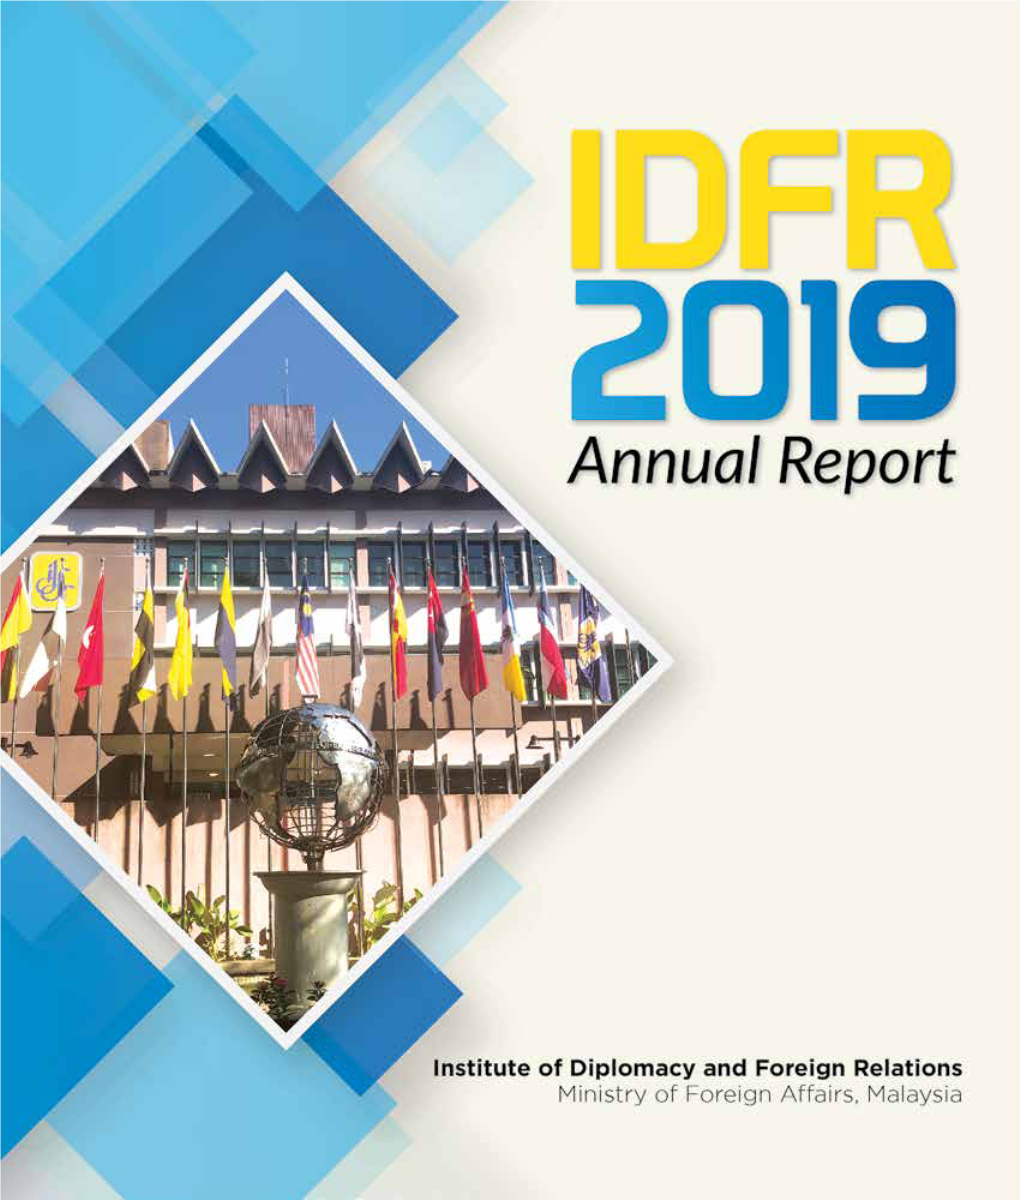 IDFR 2019 ANNUAL REPORT IDFR 2019 Annual Report